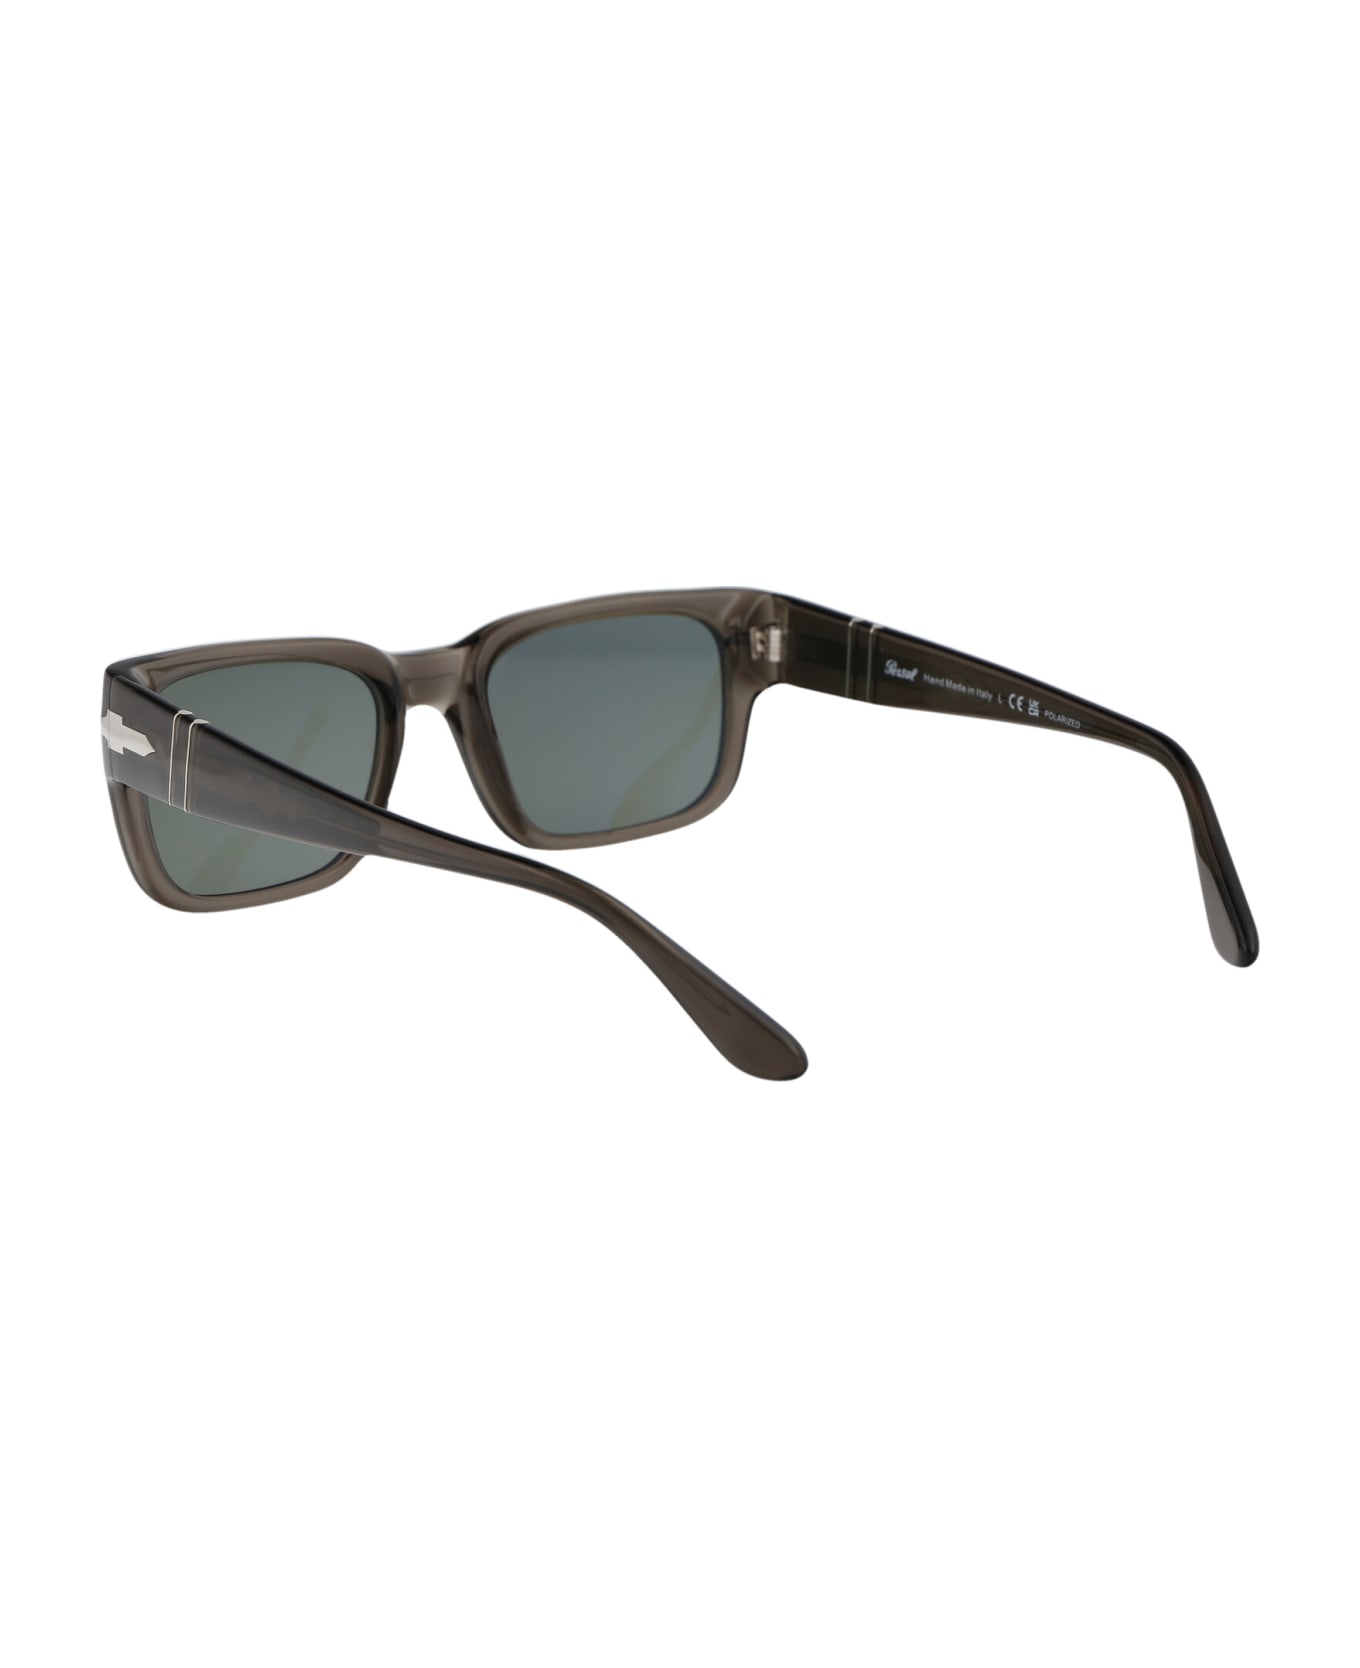 Persol 0po3315s Sunglasses - 110358 Transparent Taupe Gray